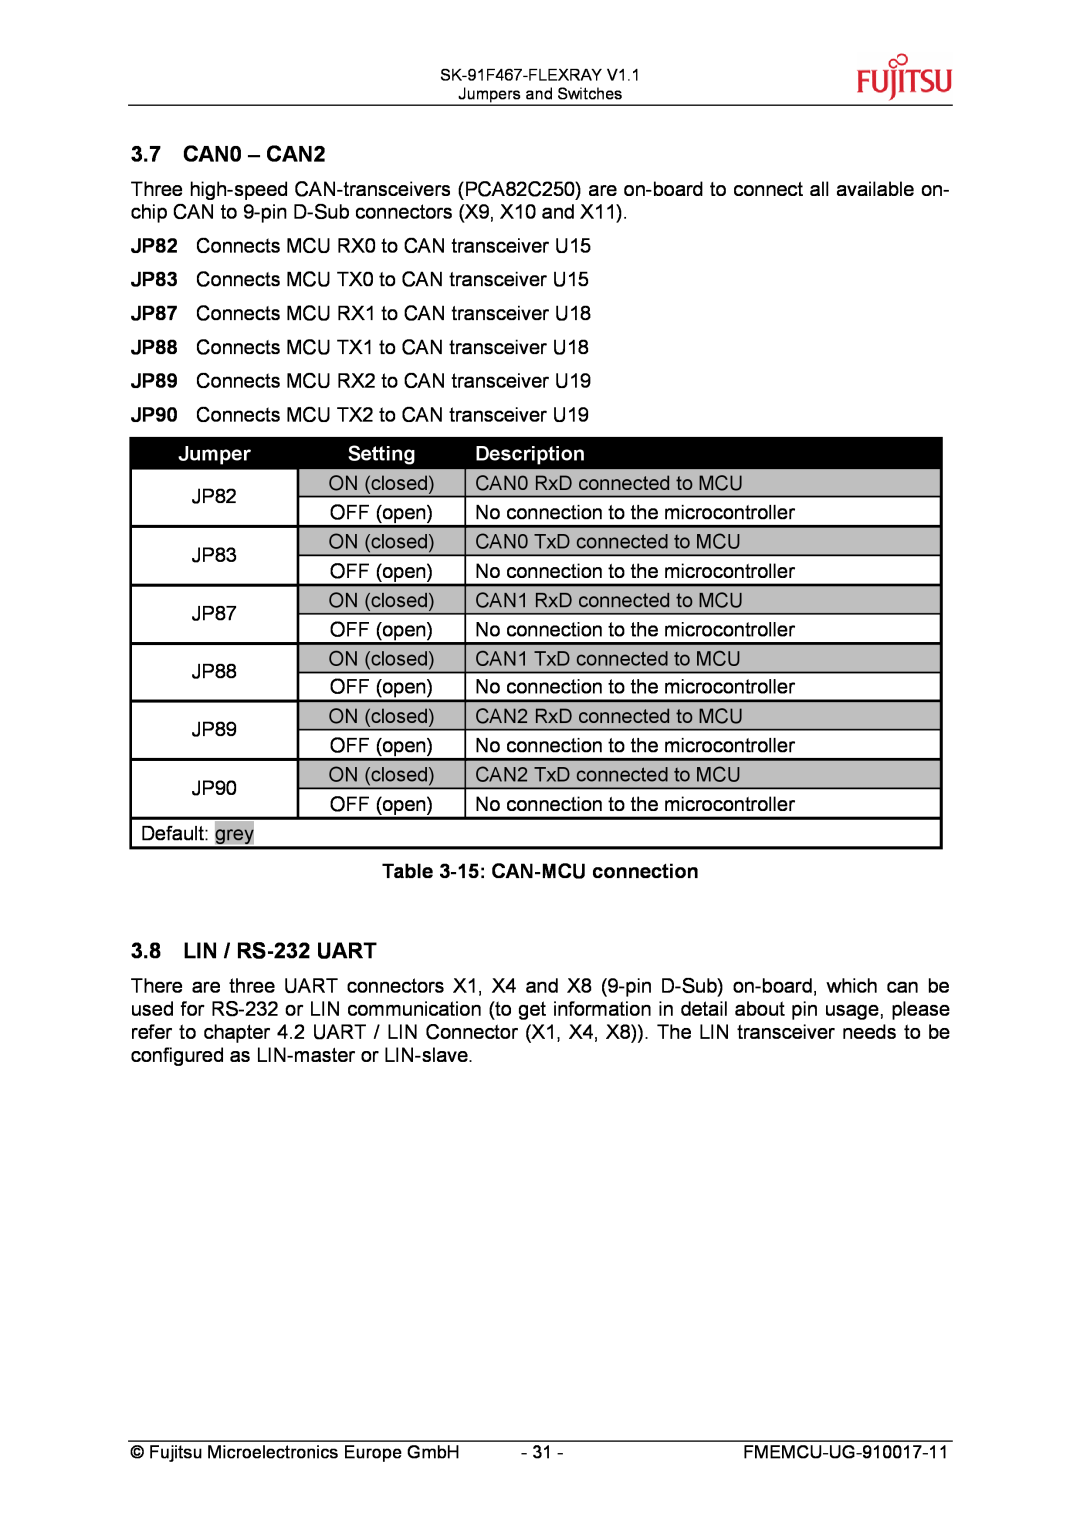 Fujitsu MB88121 SERIES manual 3.7 CAN0 - CAN2, LIN / RS-232 UART, 15 CAN-MCU connection, Jumper, Setting, Description 